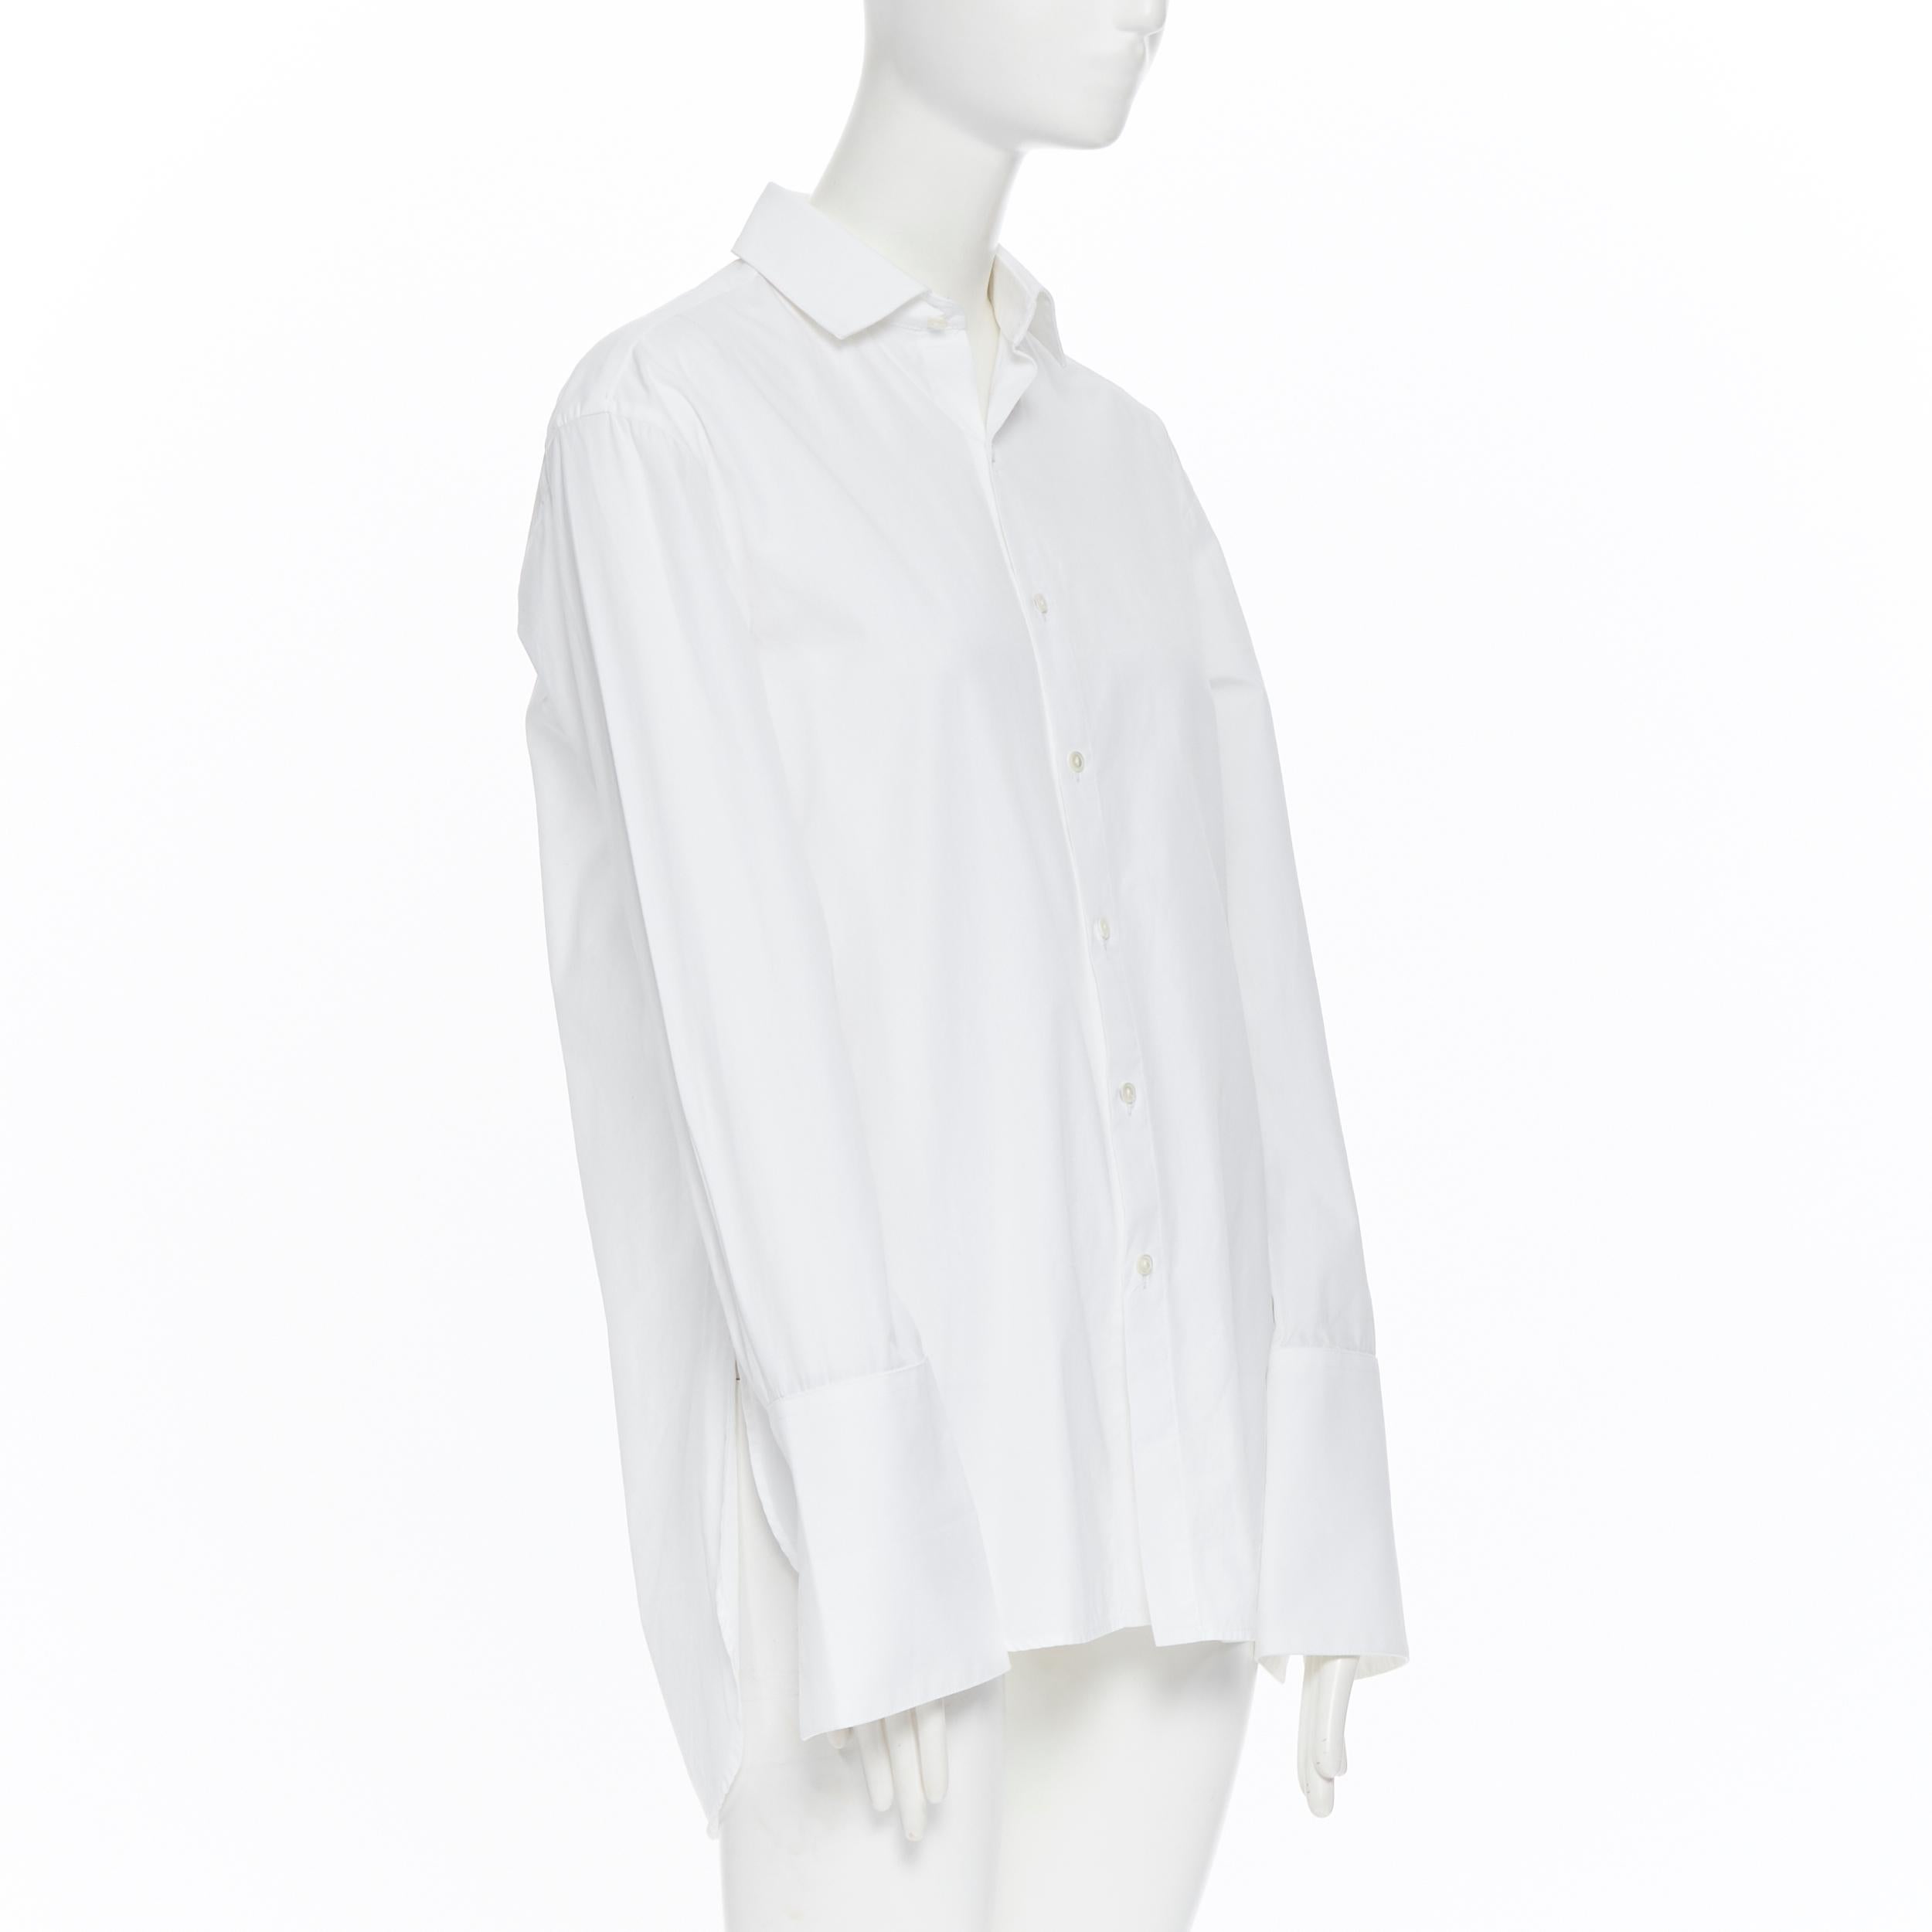 Gray PALMER HARDING white cotton elongated cuff curvec hem oversized shirt UK8